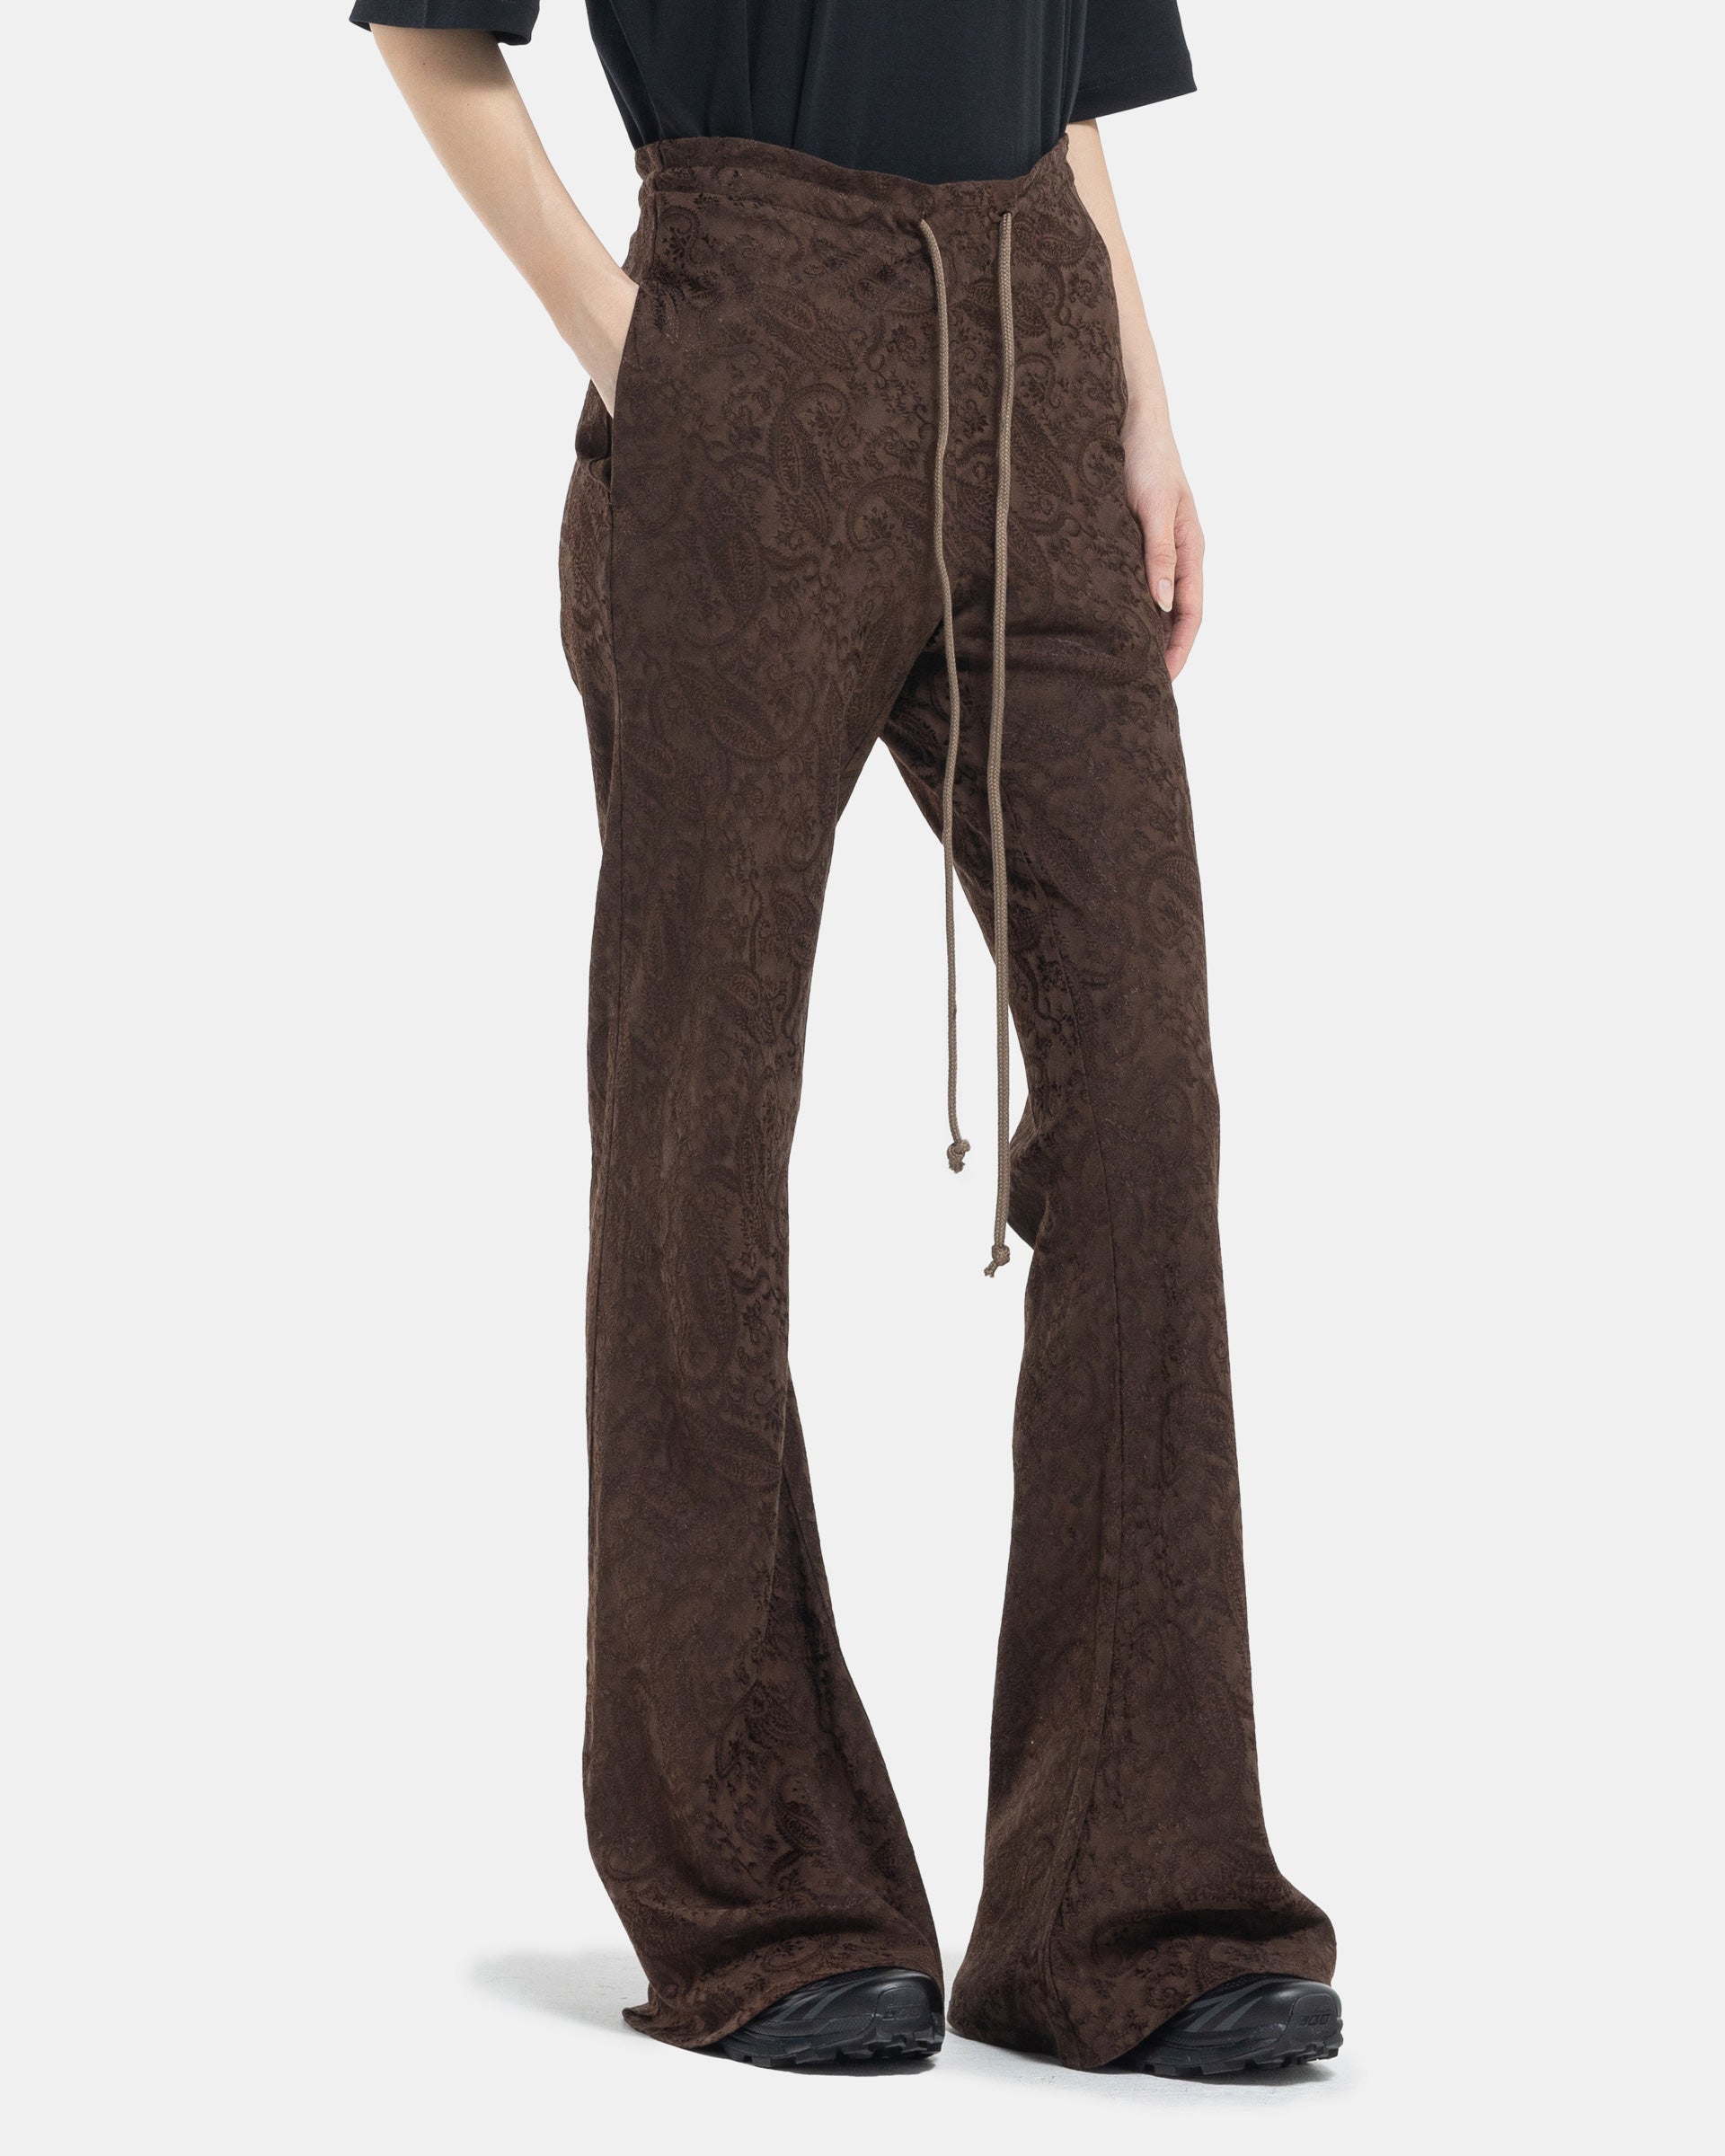 Flared Dress Pants | Bell bottom pants, Flare dress pants, Flare trousers